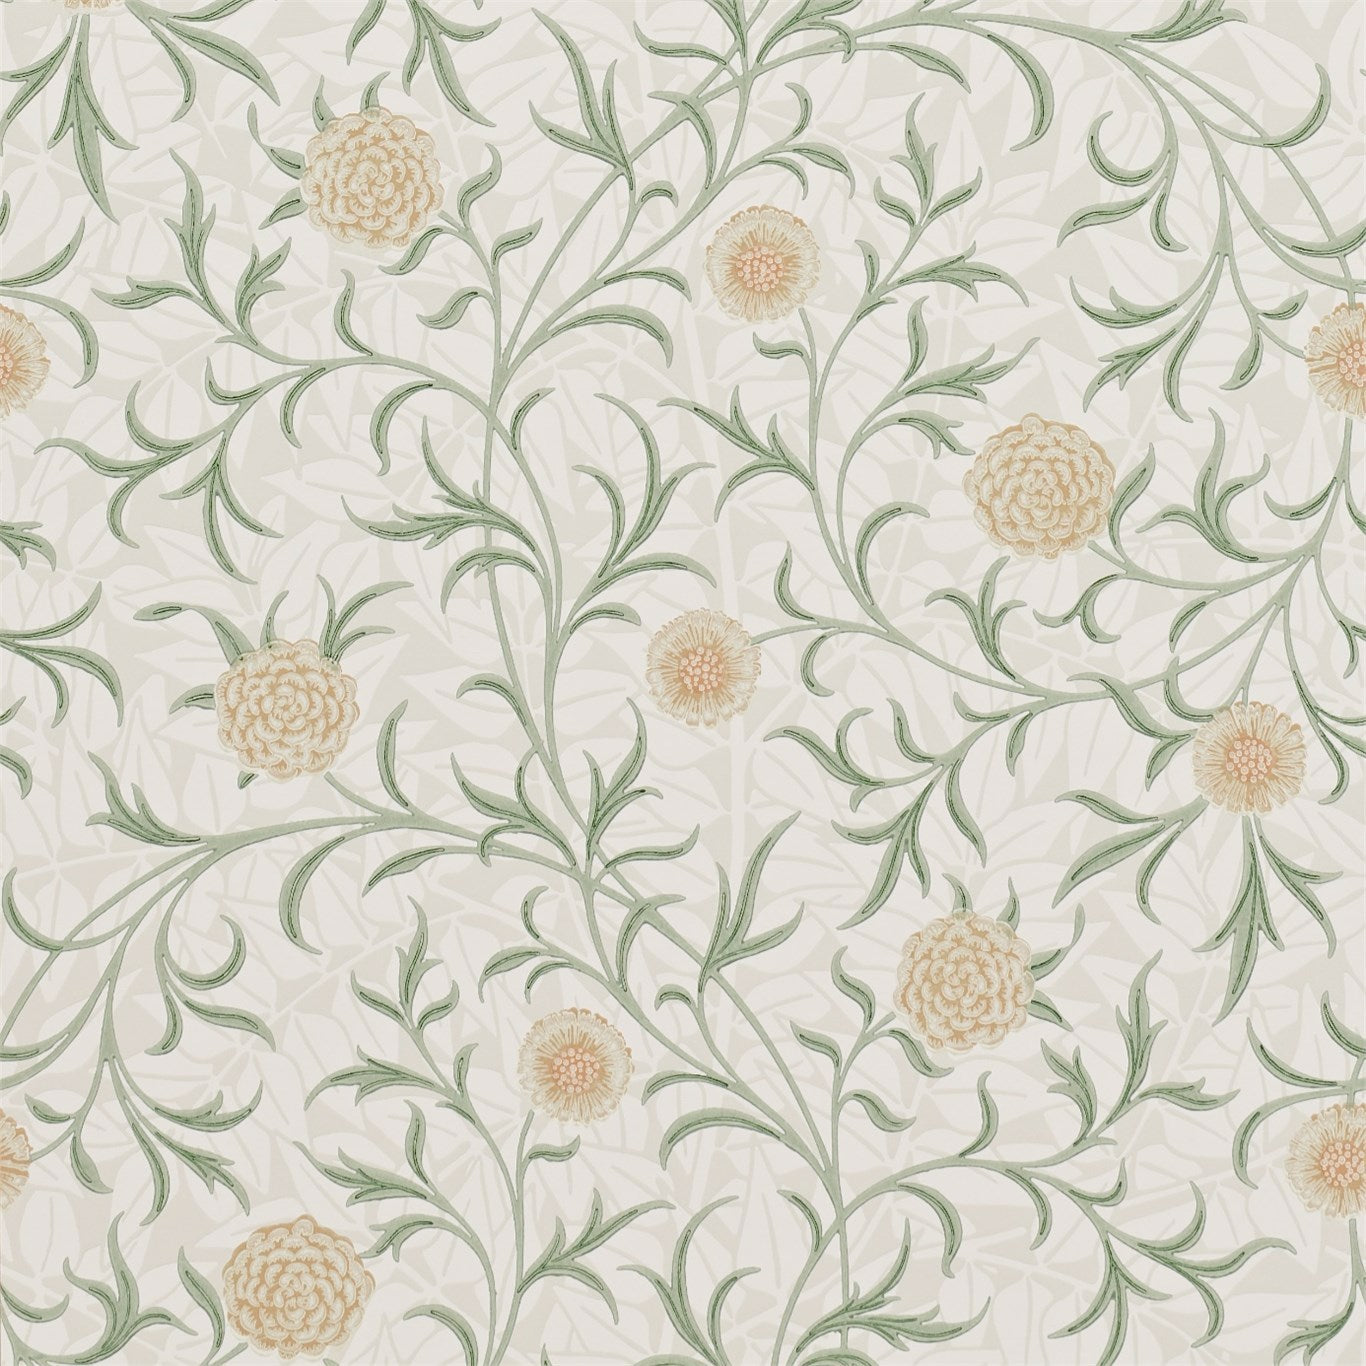 Scroll Thyme/Pear Wallpaper DM6P210365 by Morris & Co